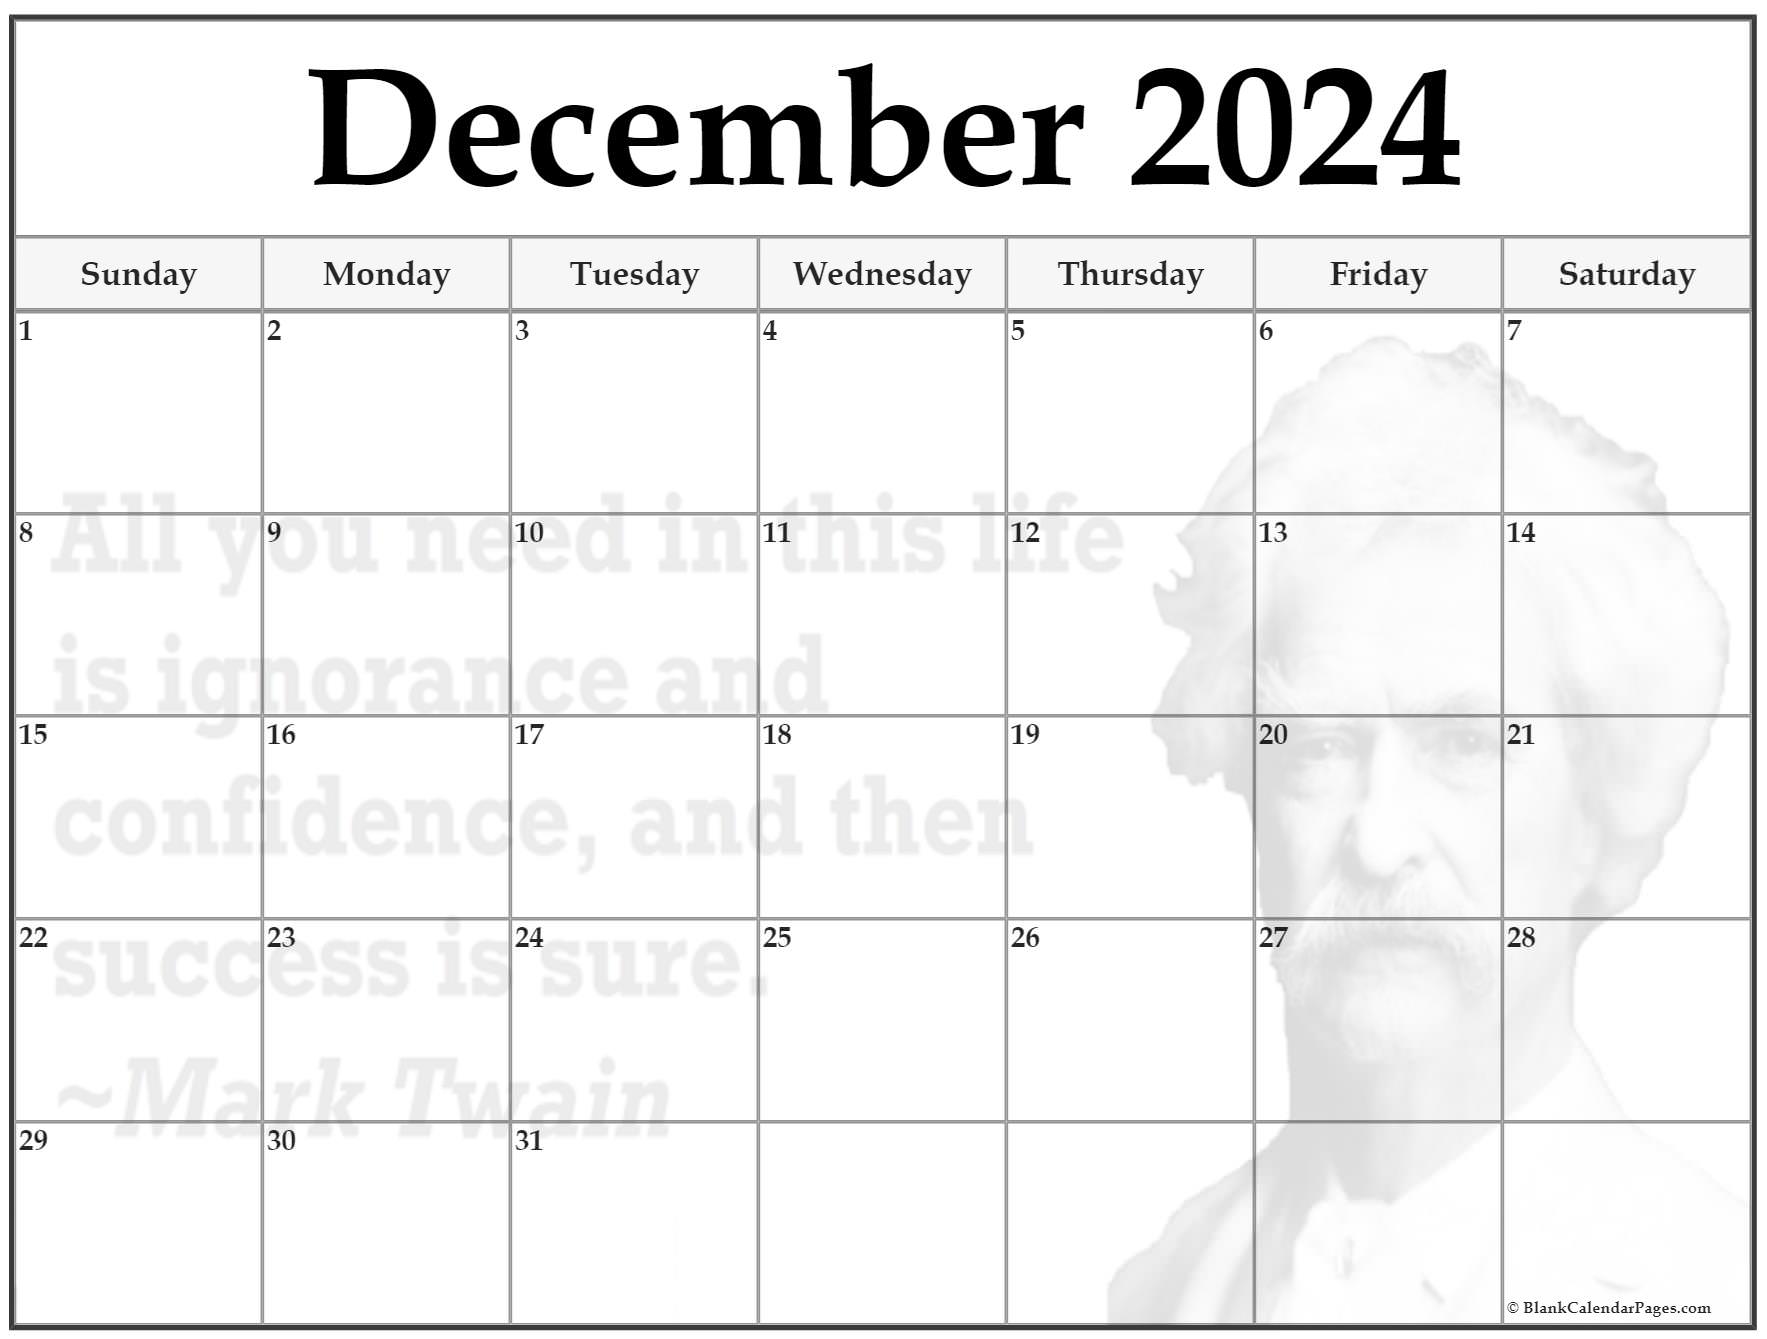 how long until december 2022